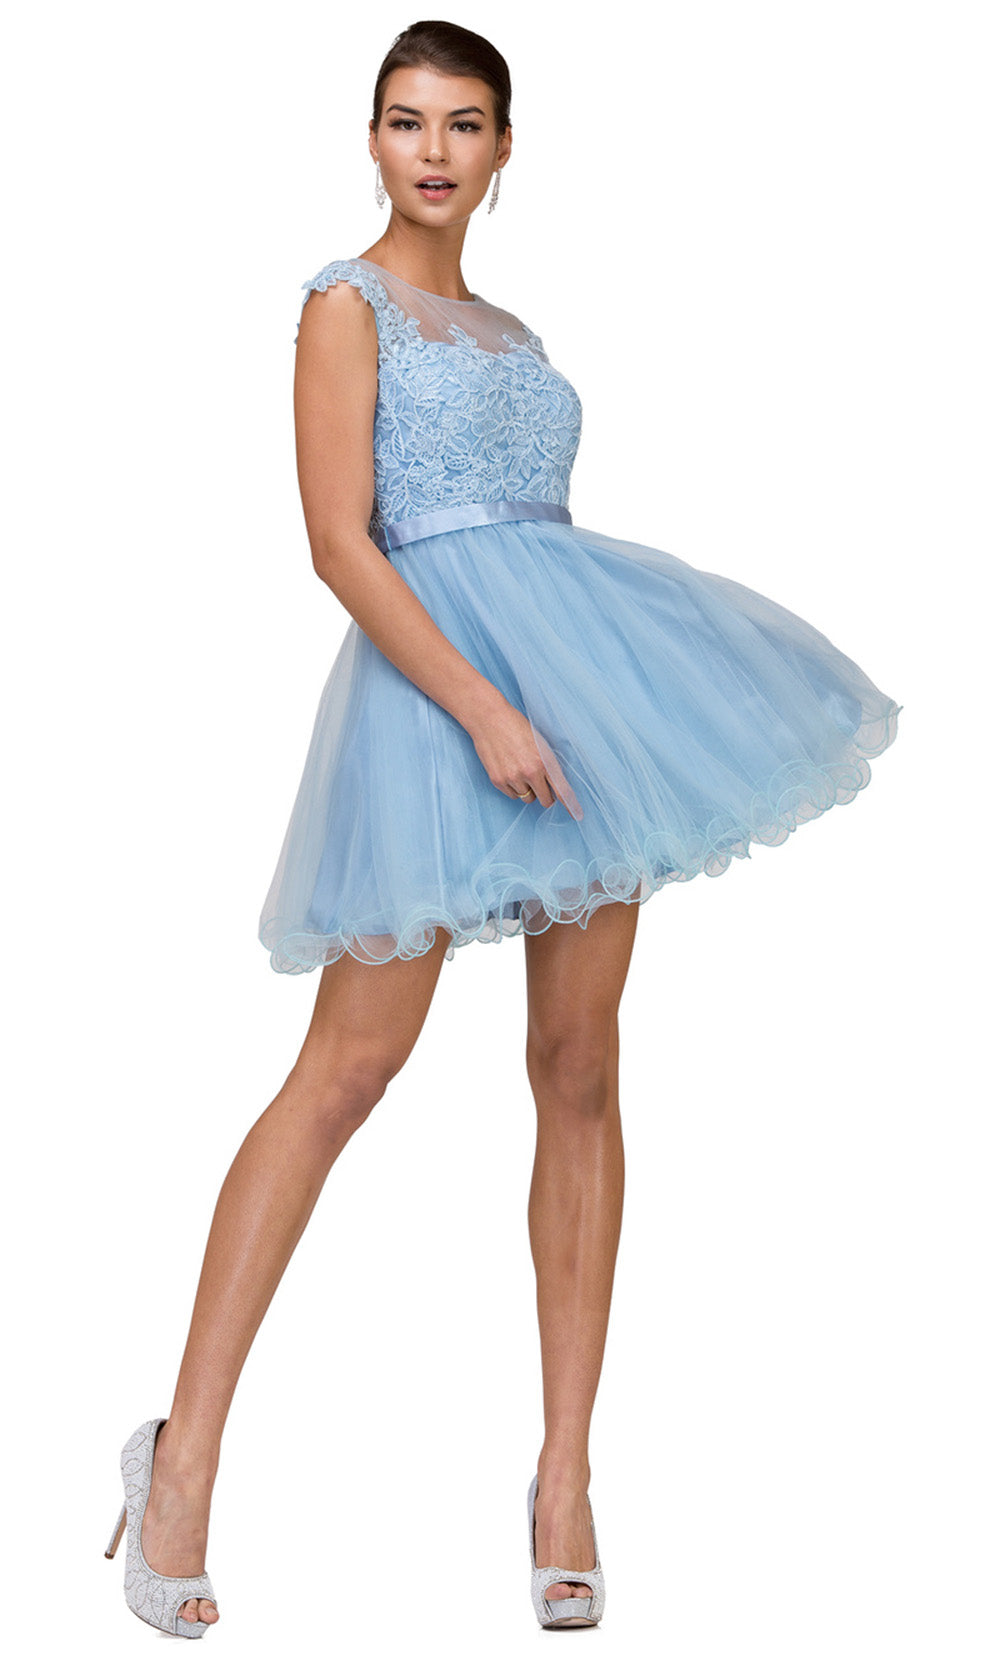 Dancing Queen - 2153 Illusion Neckline Lace Bodice A-Line Dress In Bluegrade 8 grad dresses, graduation dresses